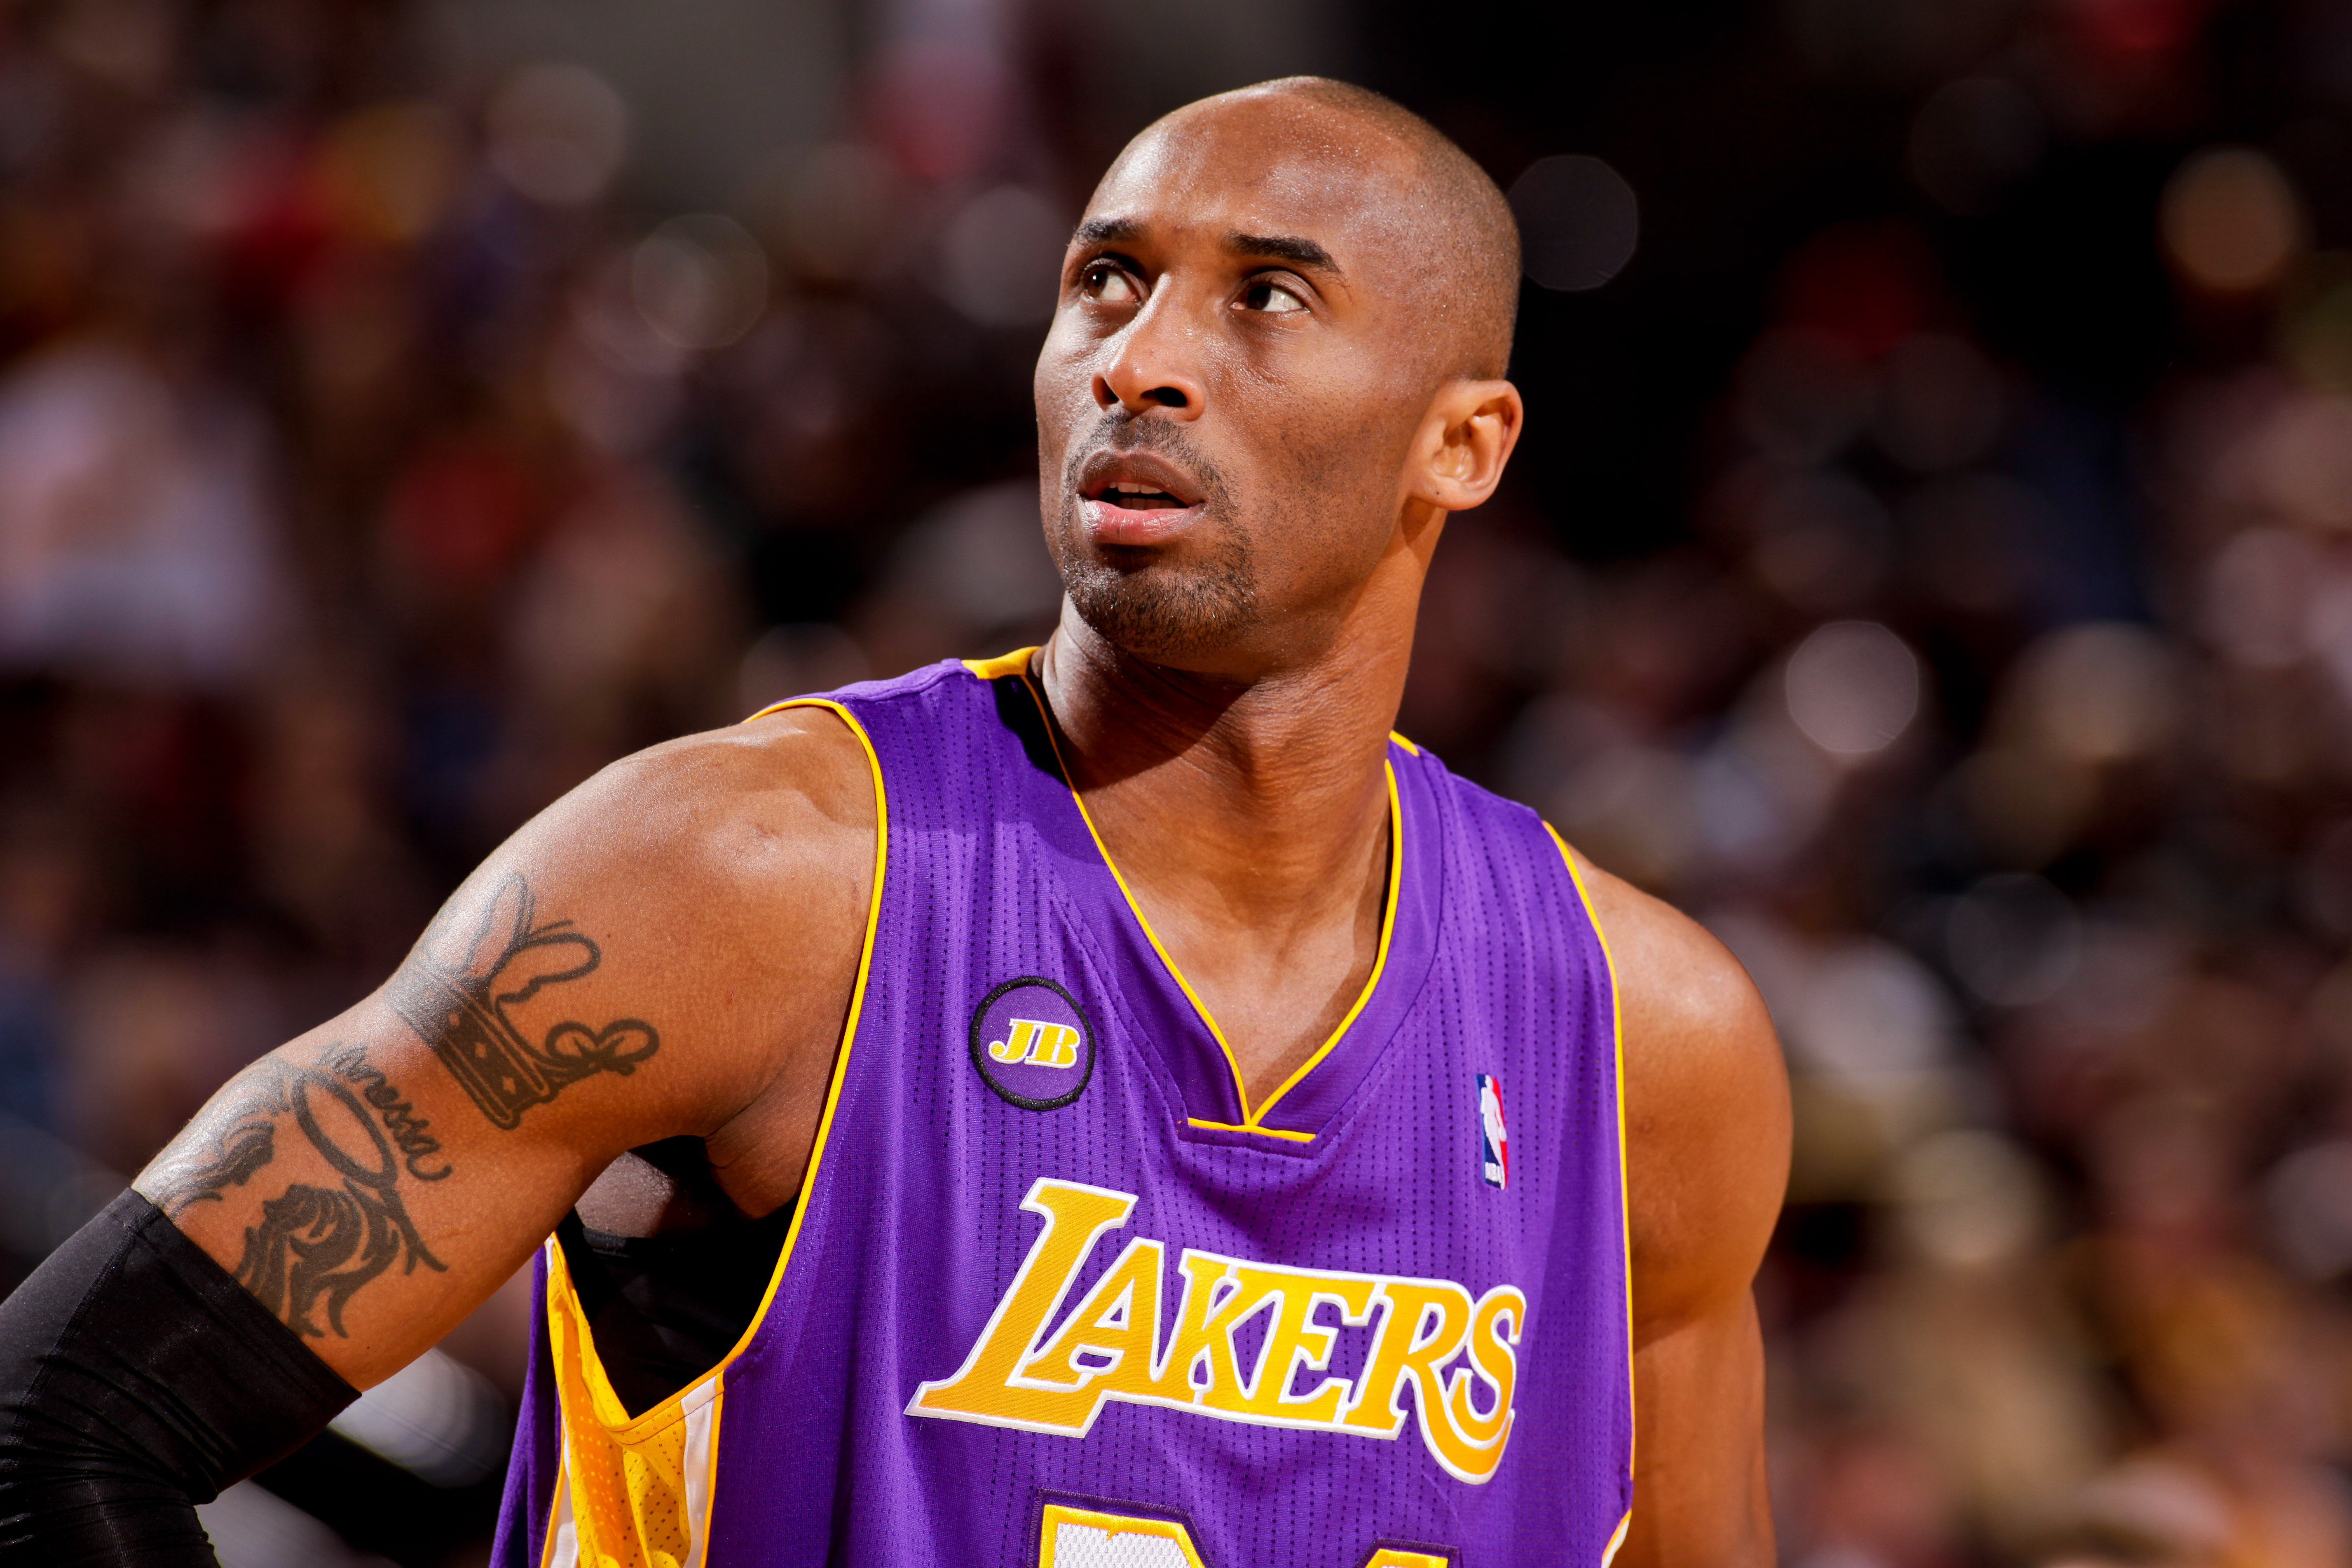 Kobe Bryant won't be a big factor in Lakers draft process, GM says